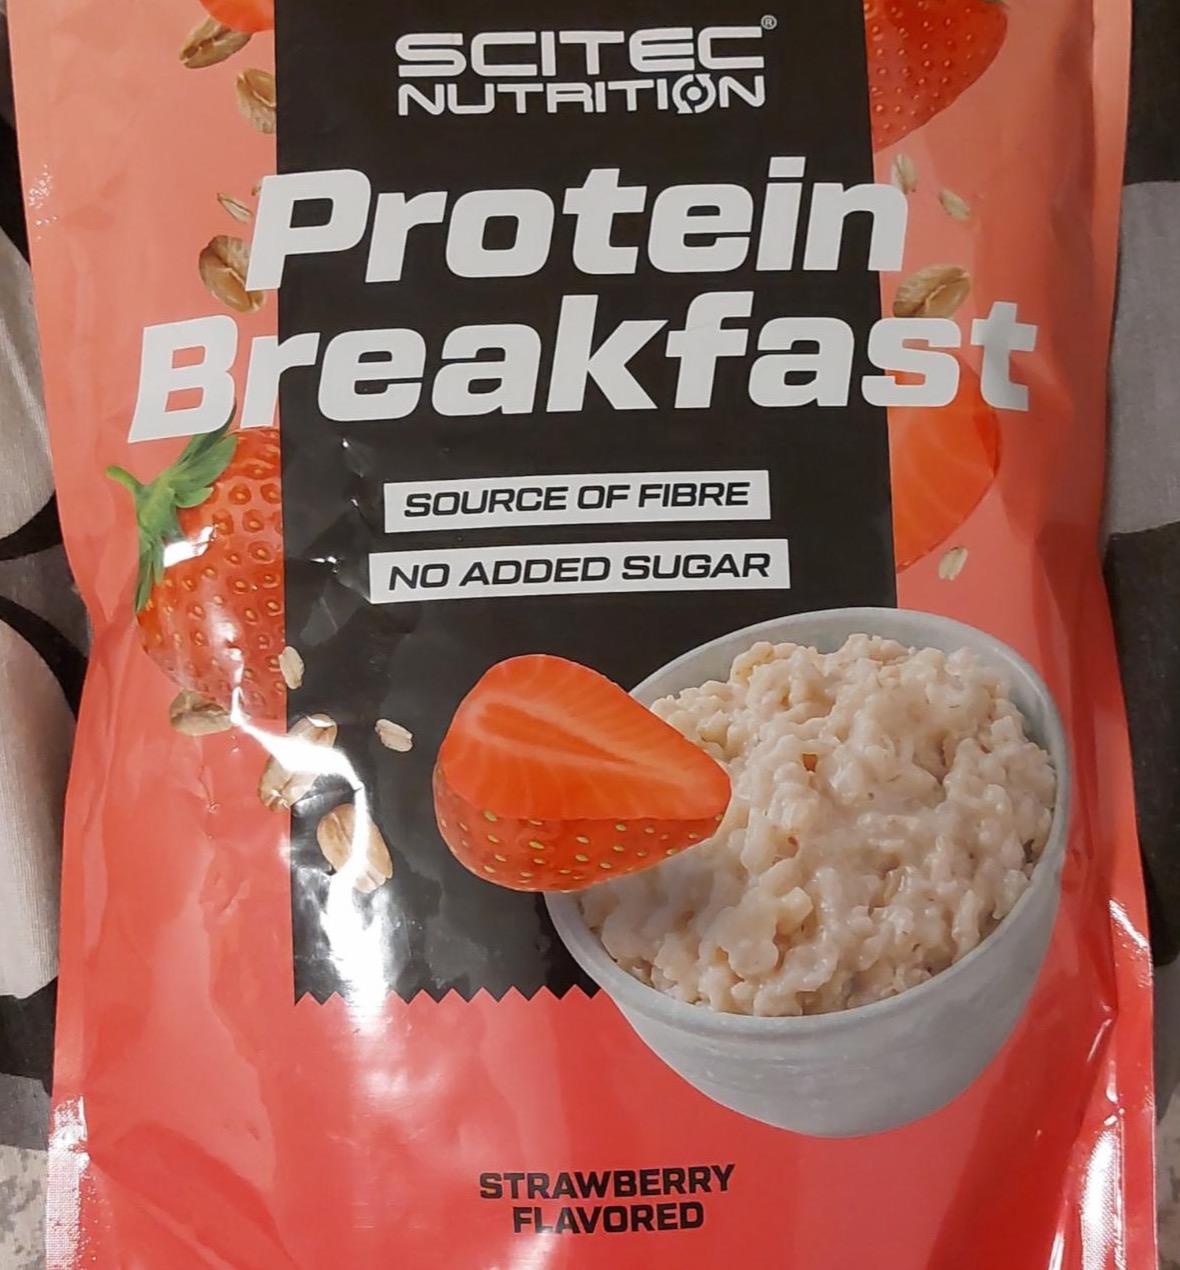 Képek - Protein Breakfast Strawberry Scitec Nutrition